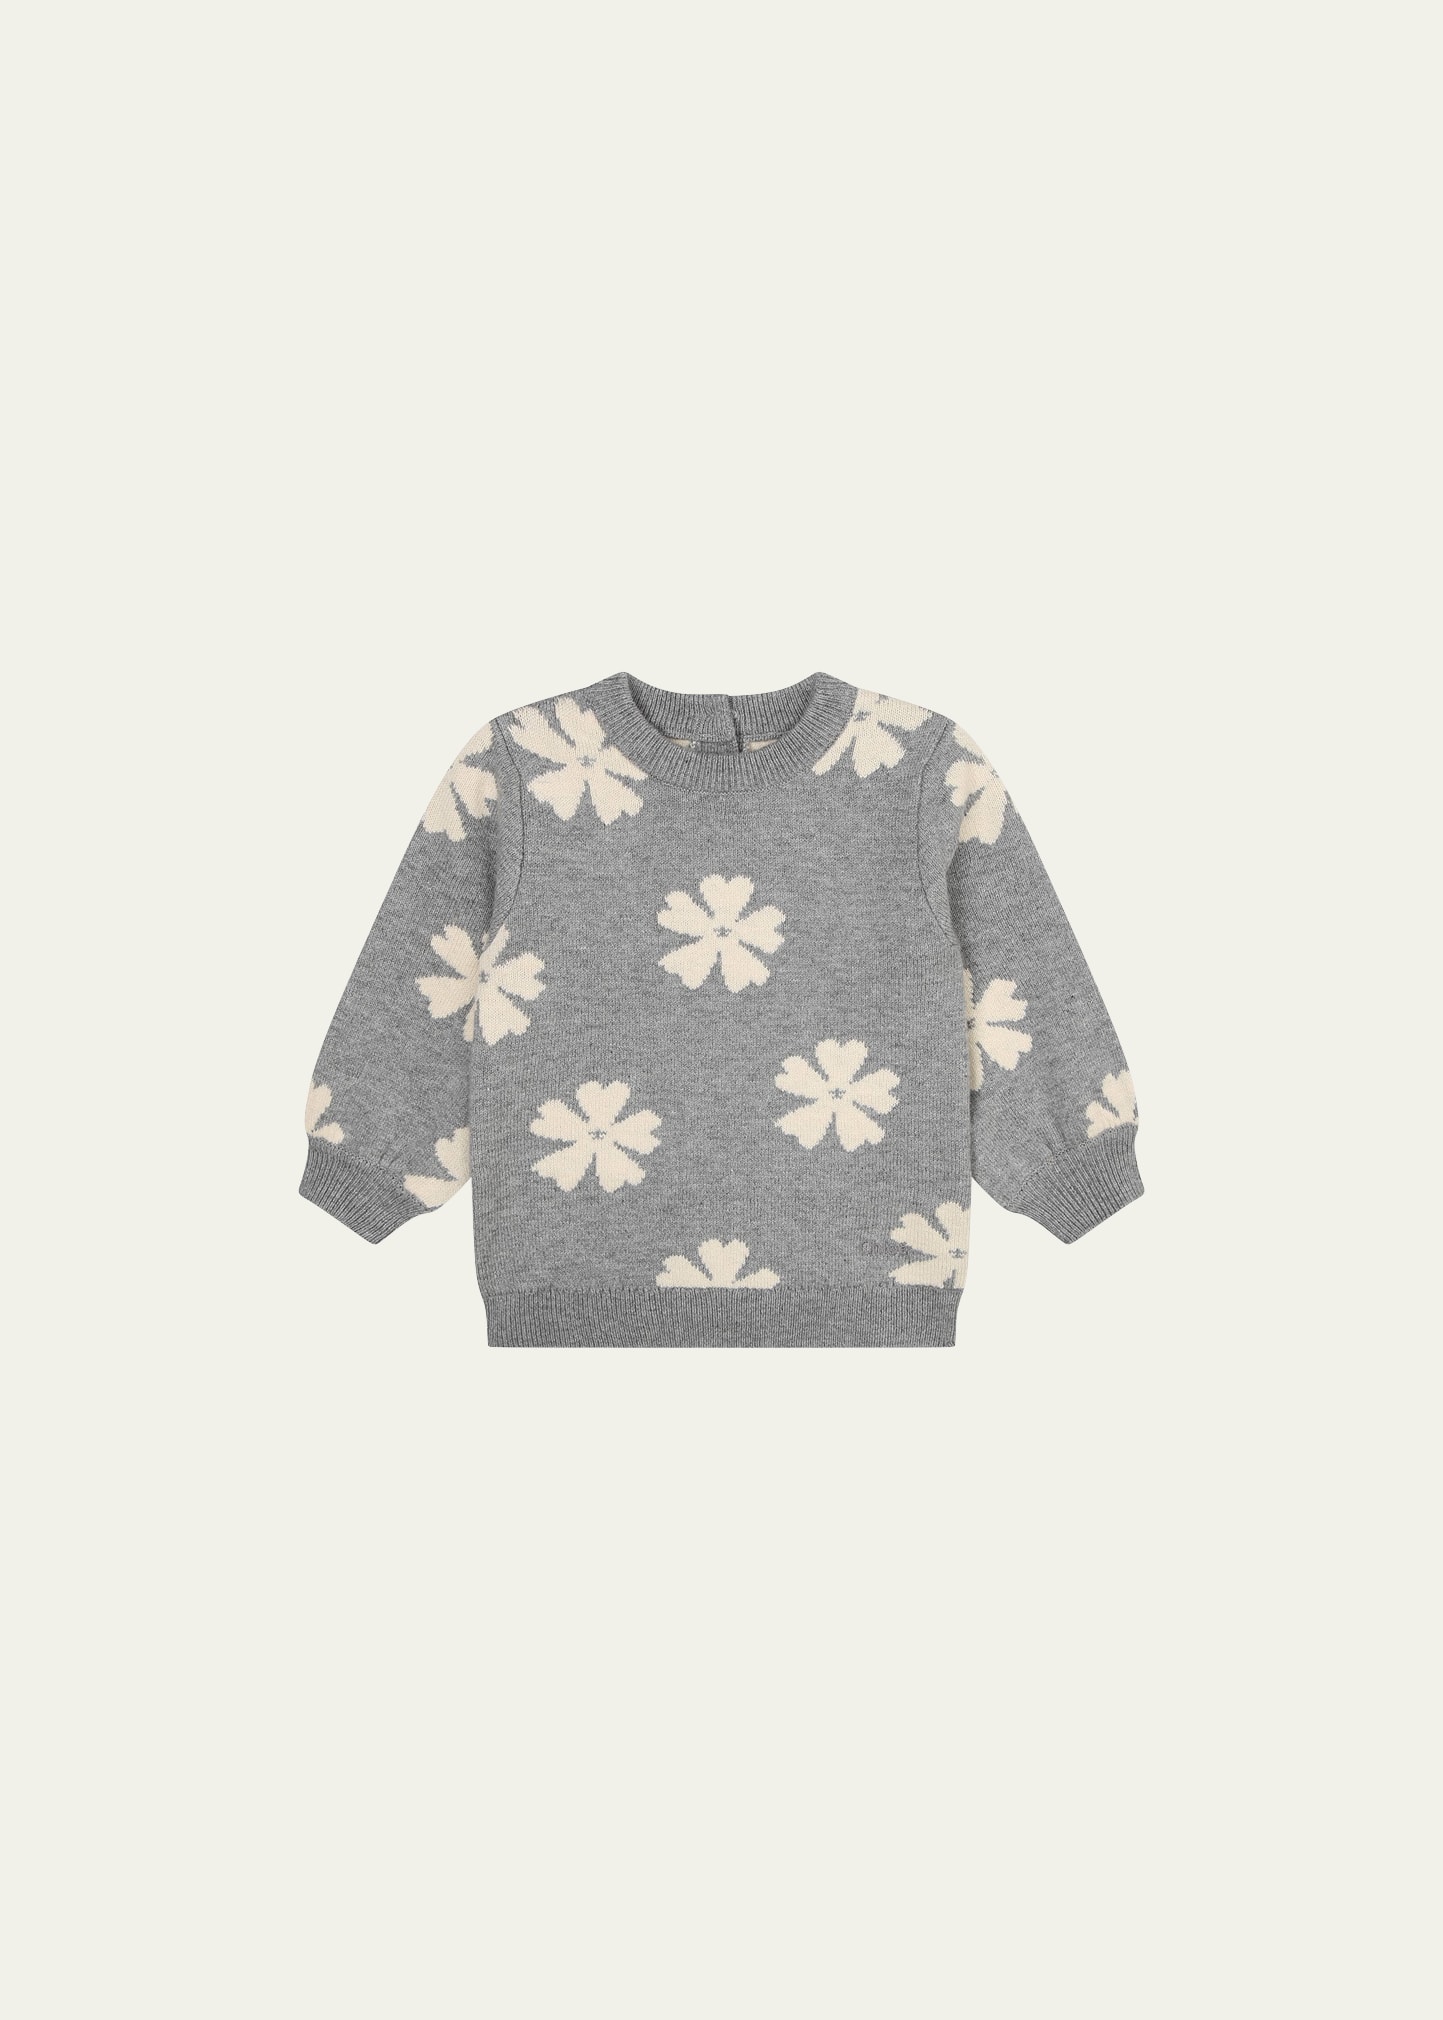 Chloé Kids' Girl's Flower Printed Wool Sweater In A38-grey Marl Med